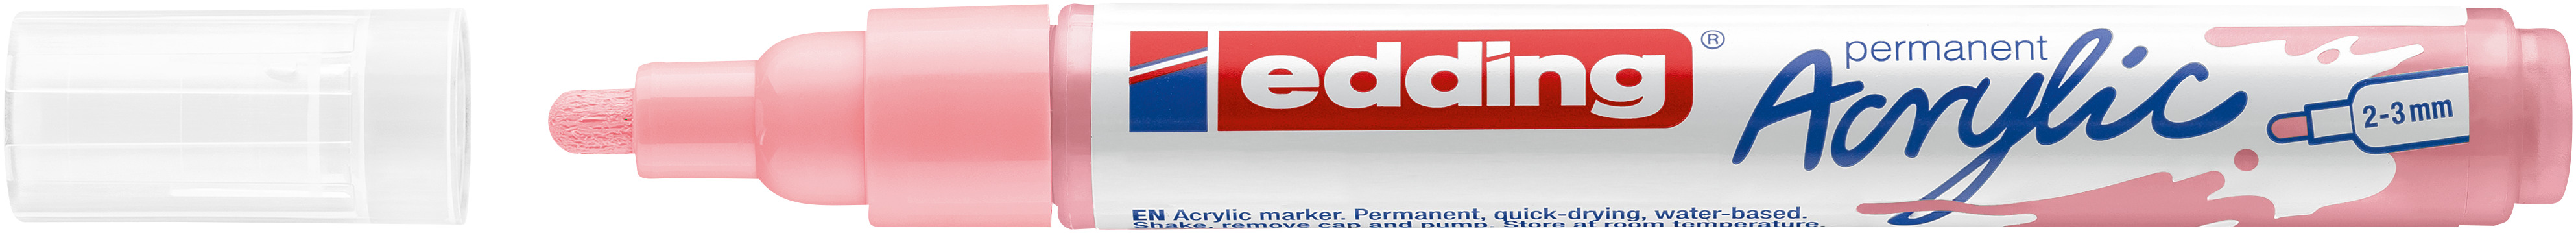 EDDING Acrylmarker 5100 2-3mm 5100-935 classy mauve